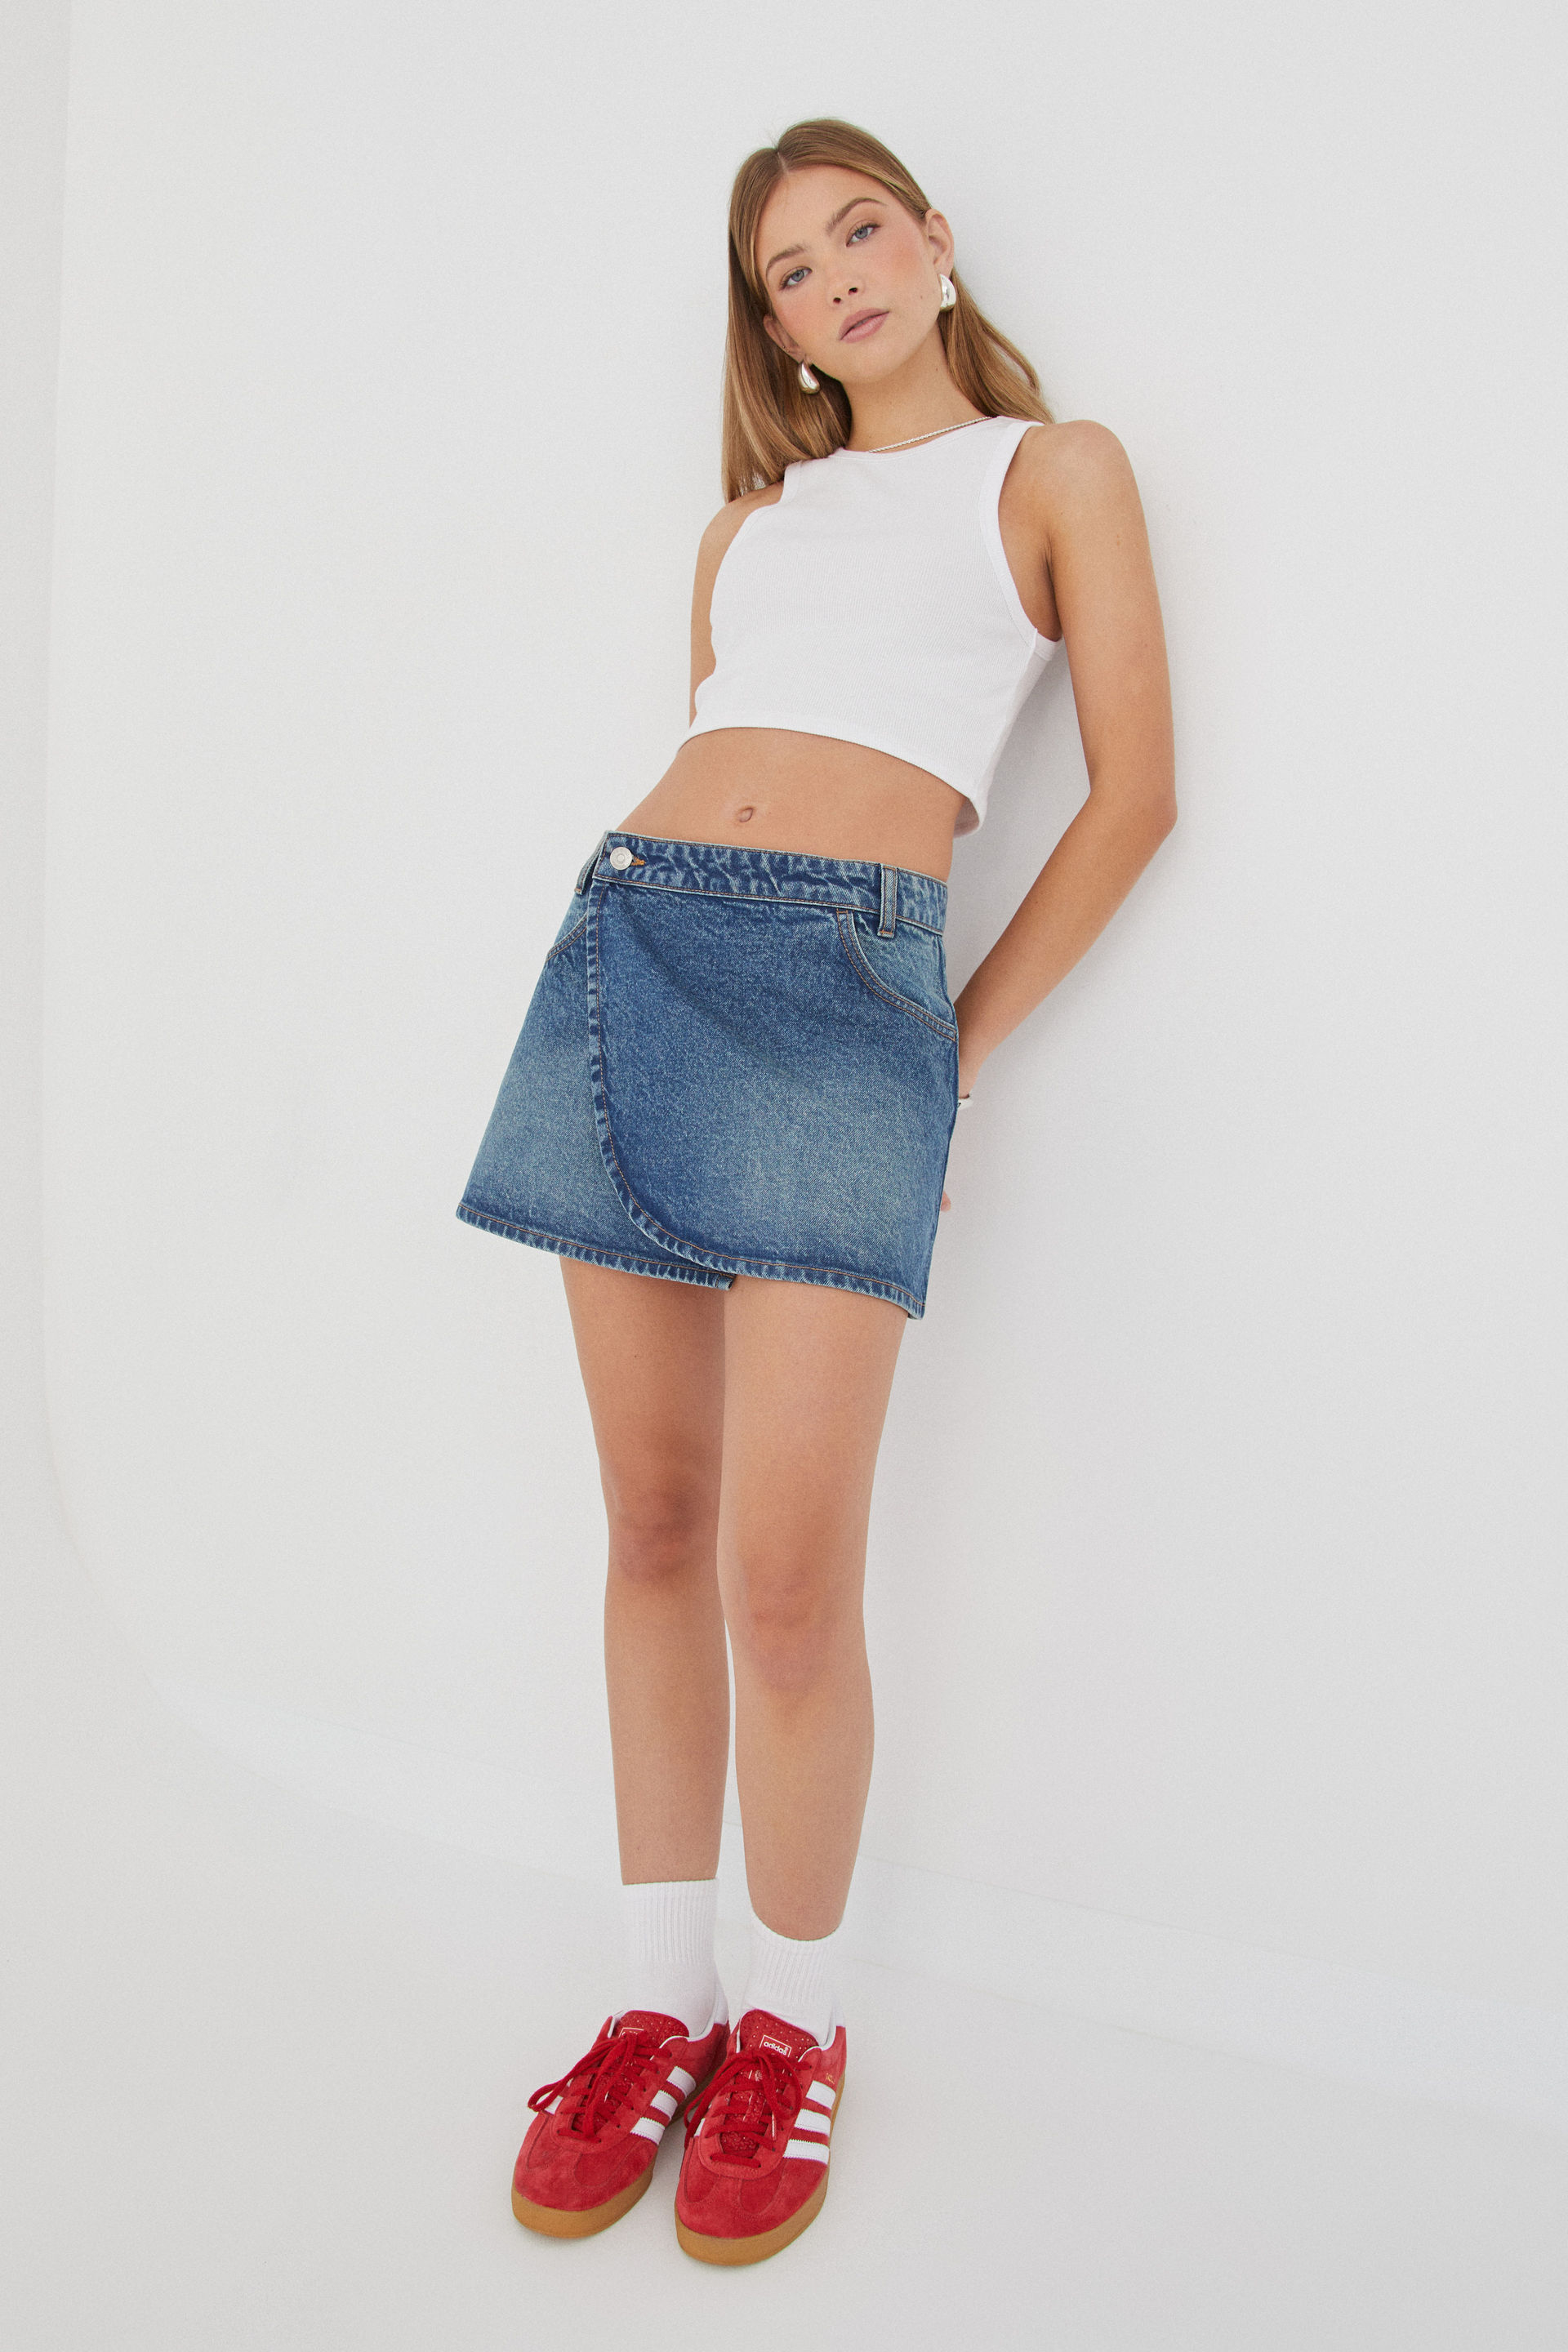 LISTHA Secy Denim Mini Skirts Mini Short Skirt Women Summer Jeans Pockets  Slim Tassel Short Skirts at Amazon Women's Clothing store